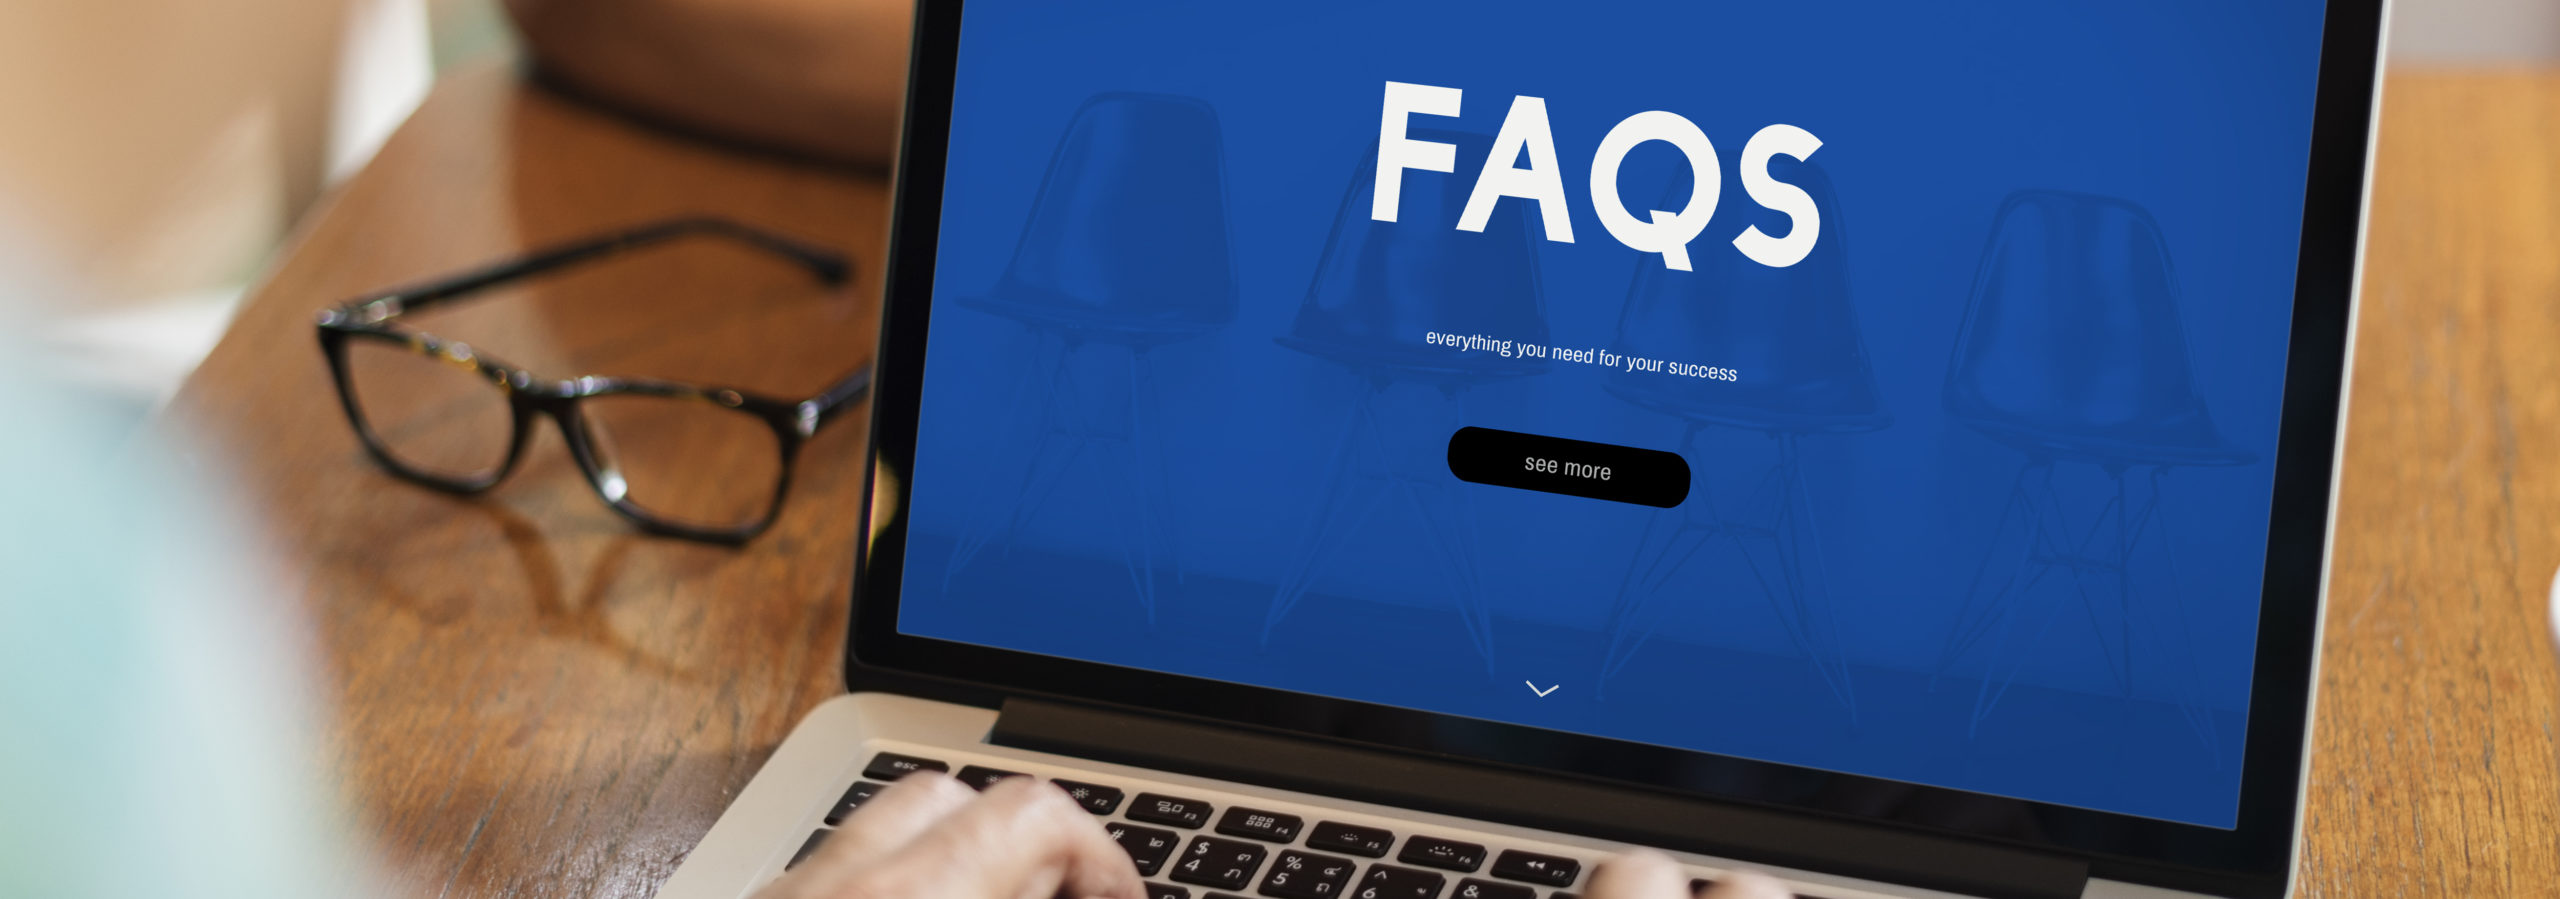 Medicare Education Center FAQs